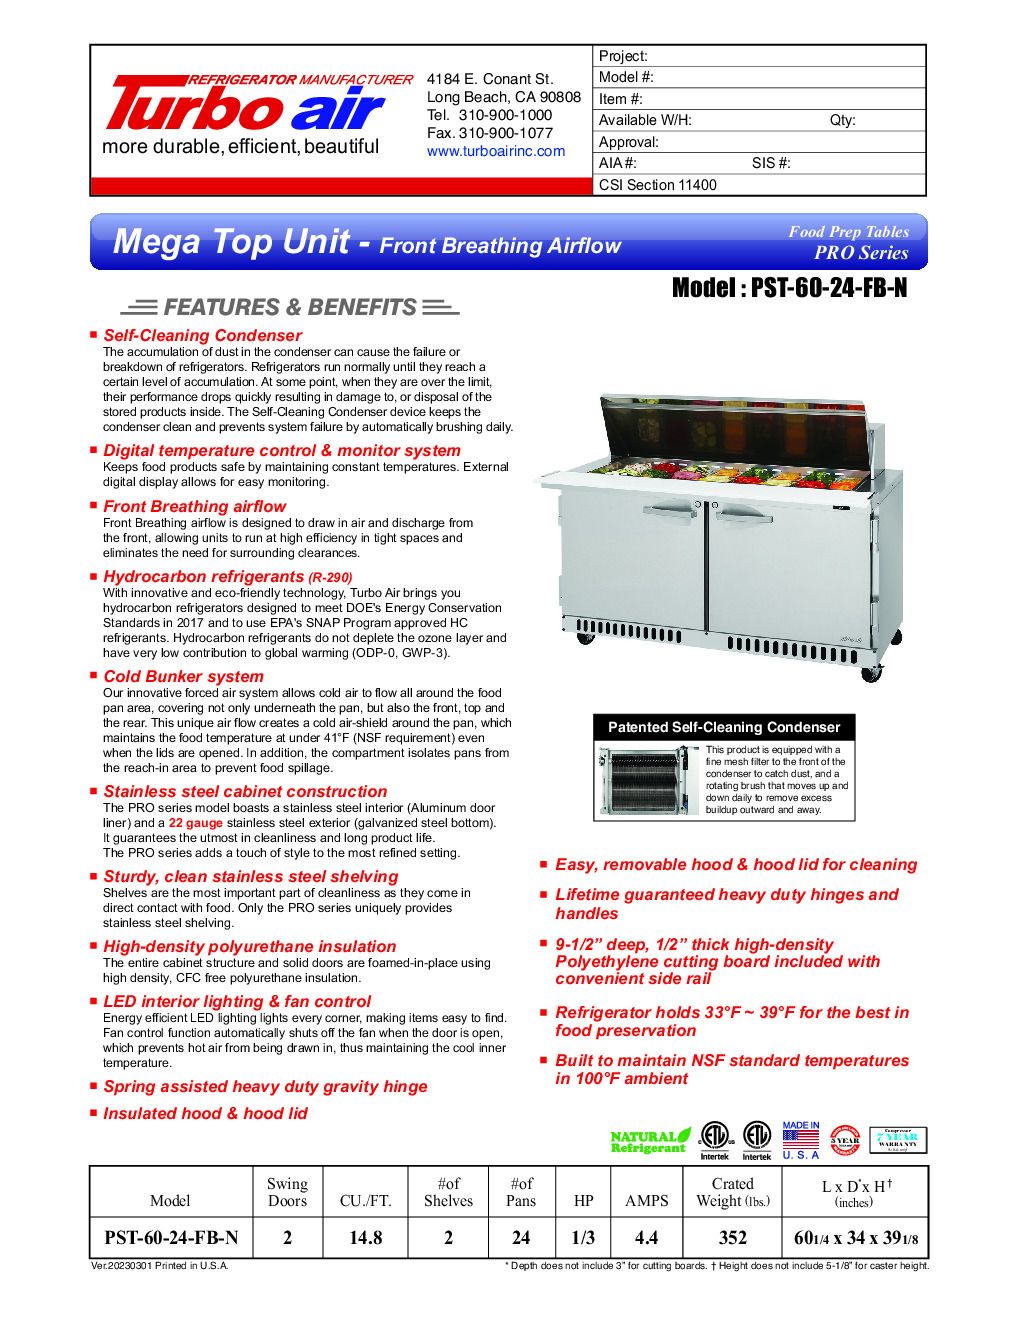 Turbo Air PST-60-24-FB-N Mega Top Sandwich / Salad Unit Refrigerated Counter